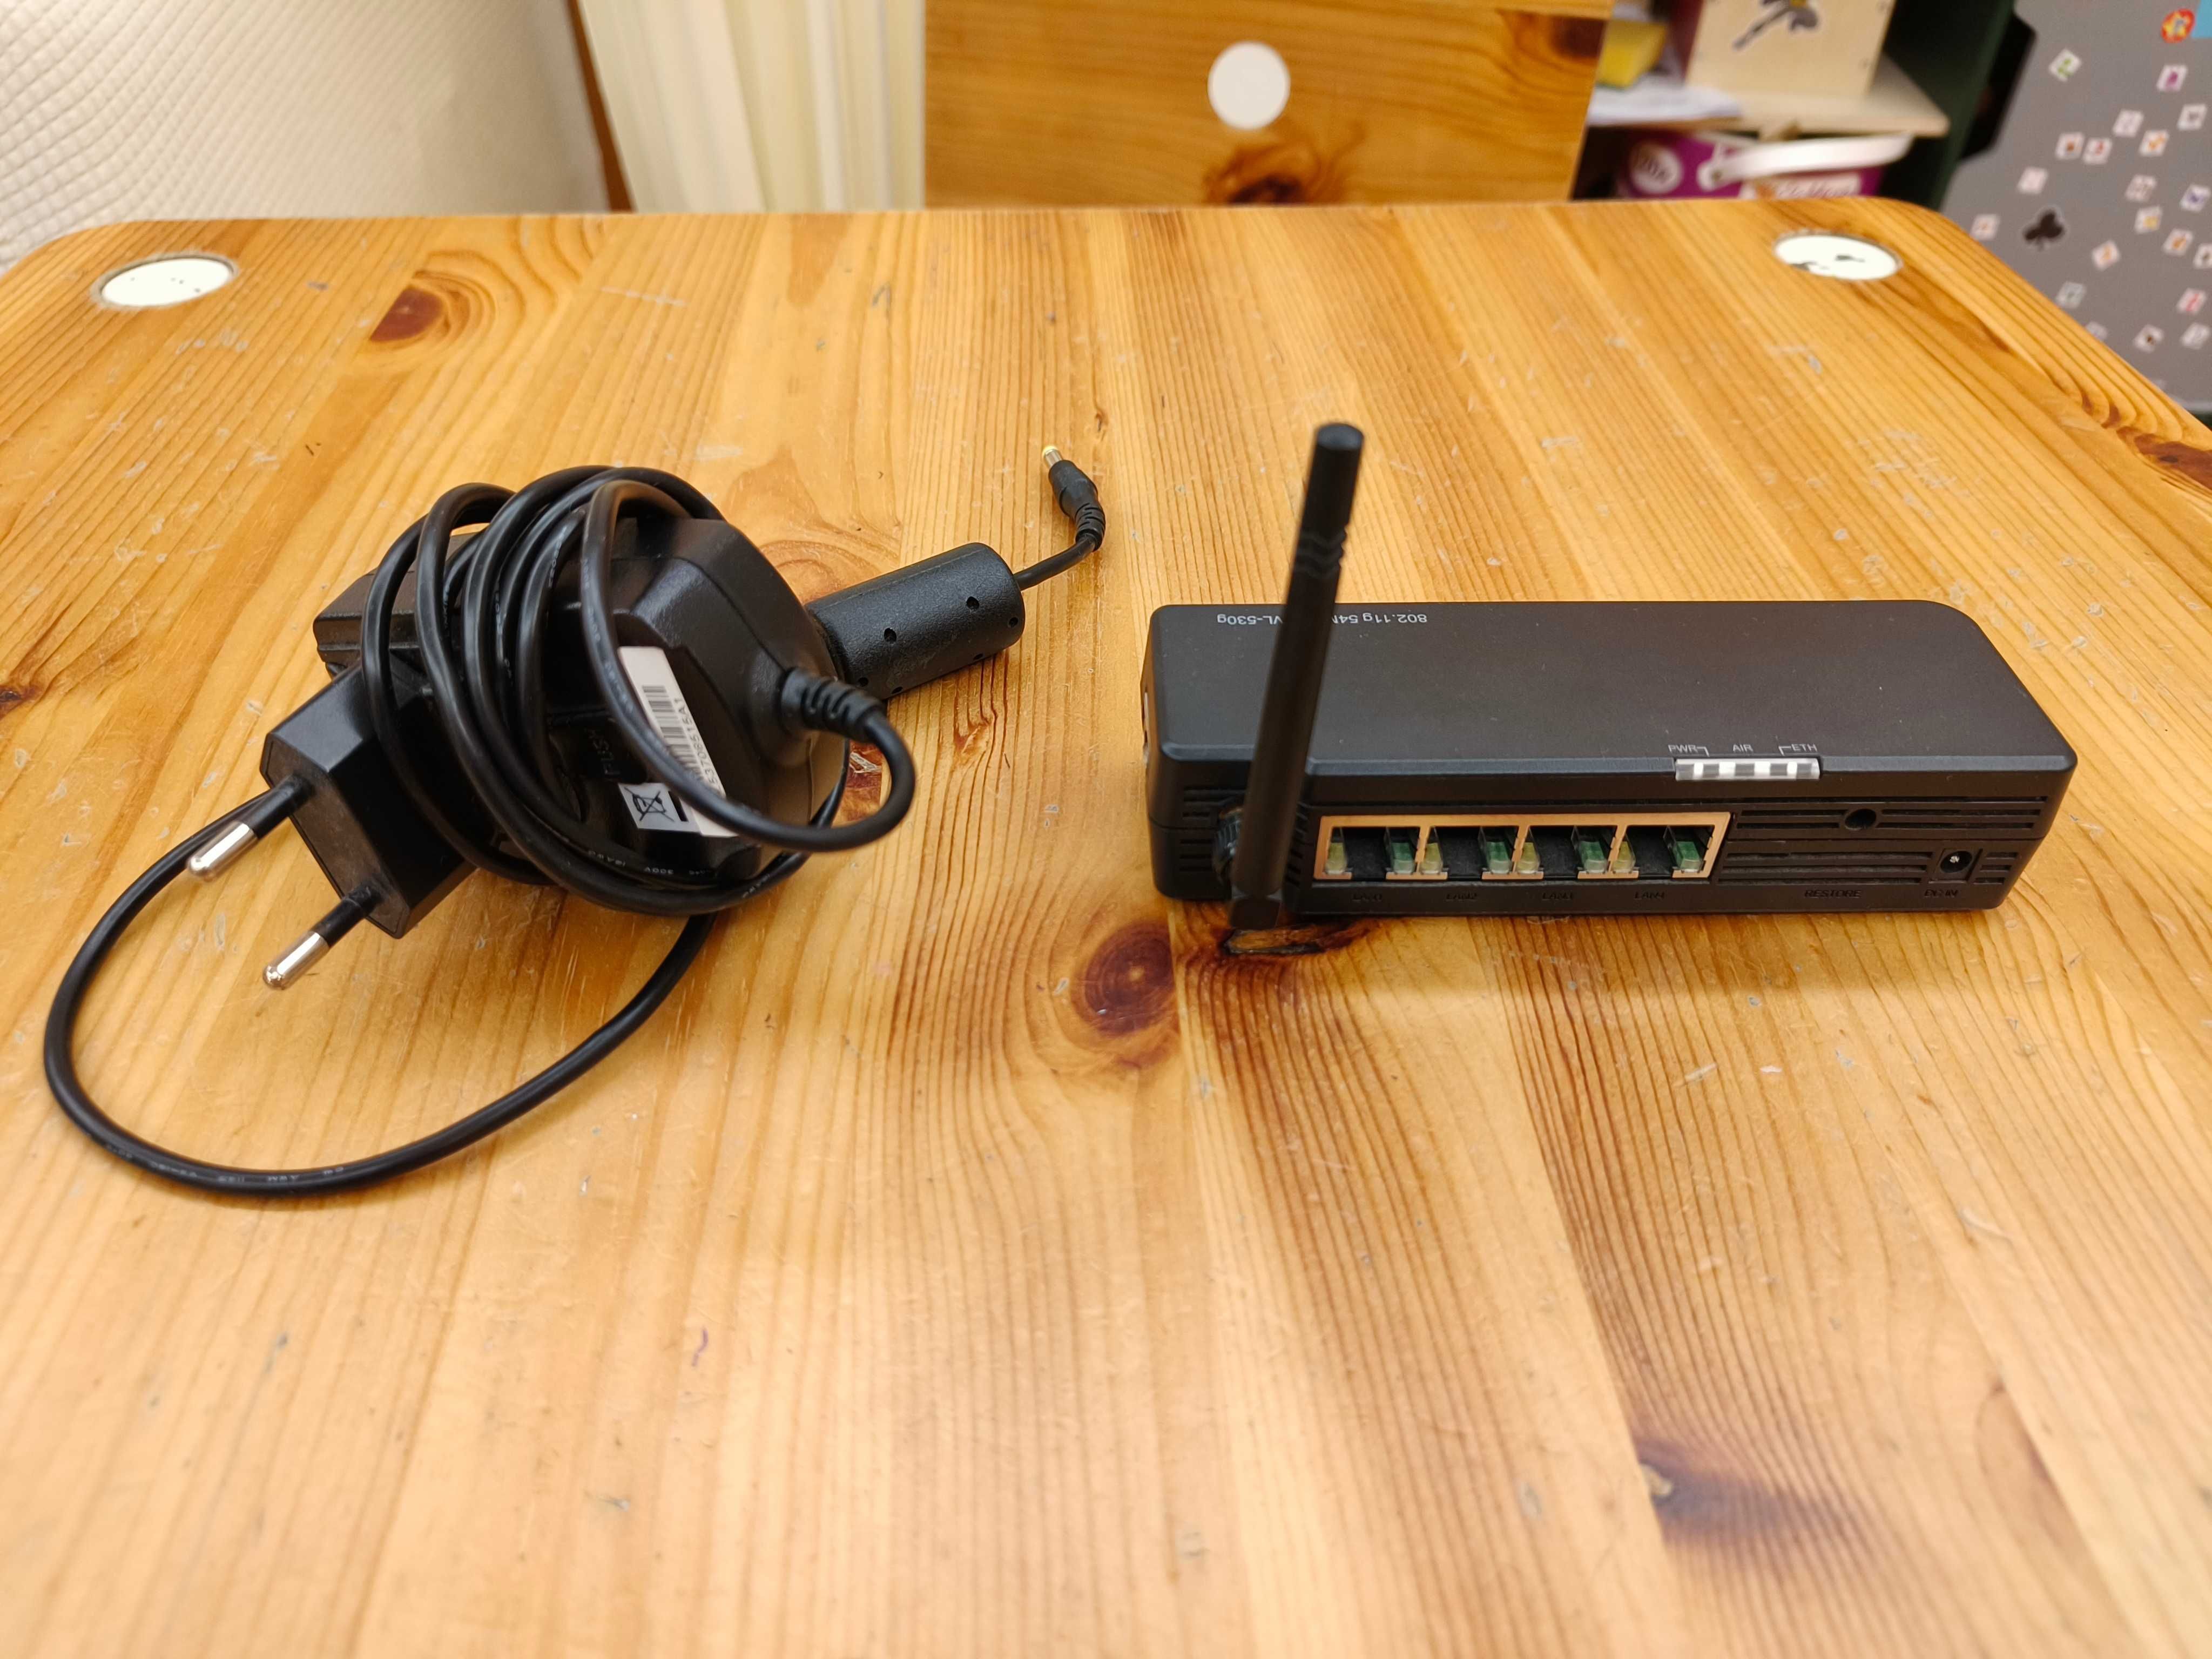 Asus WL530g - mini router wireless